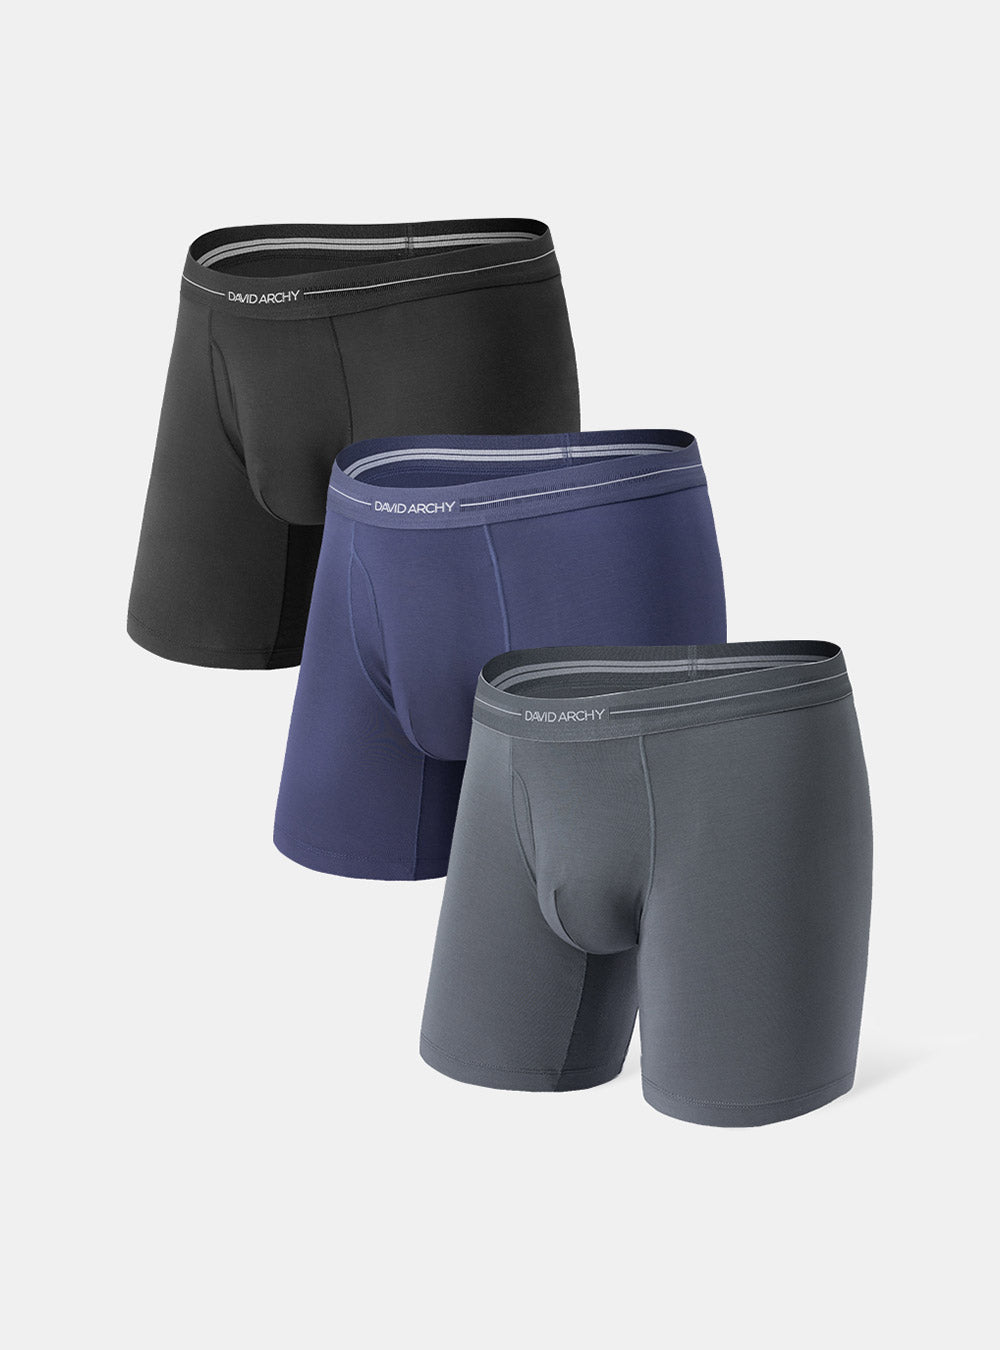 David Archy Underwear & Socks for Men - Poshmark